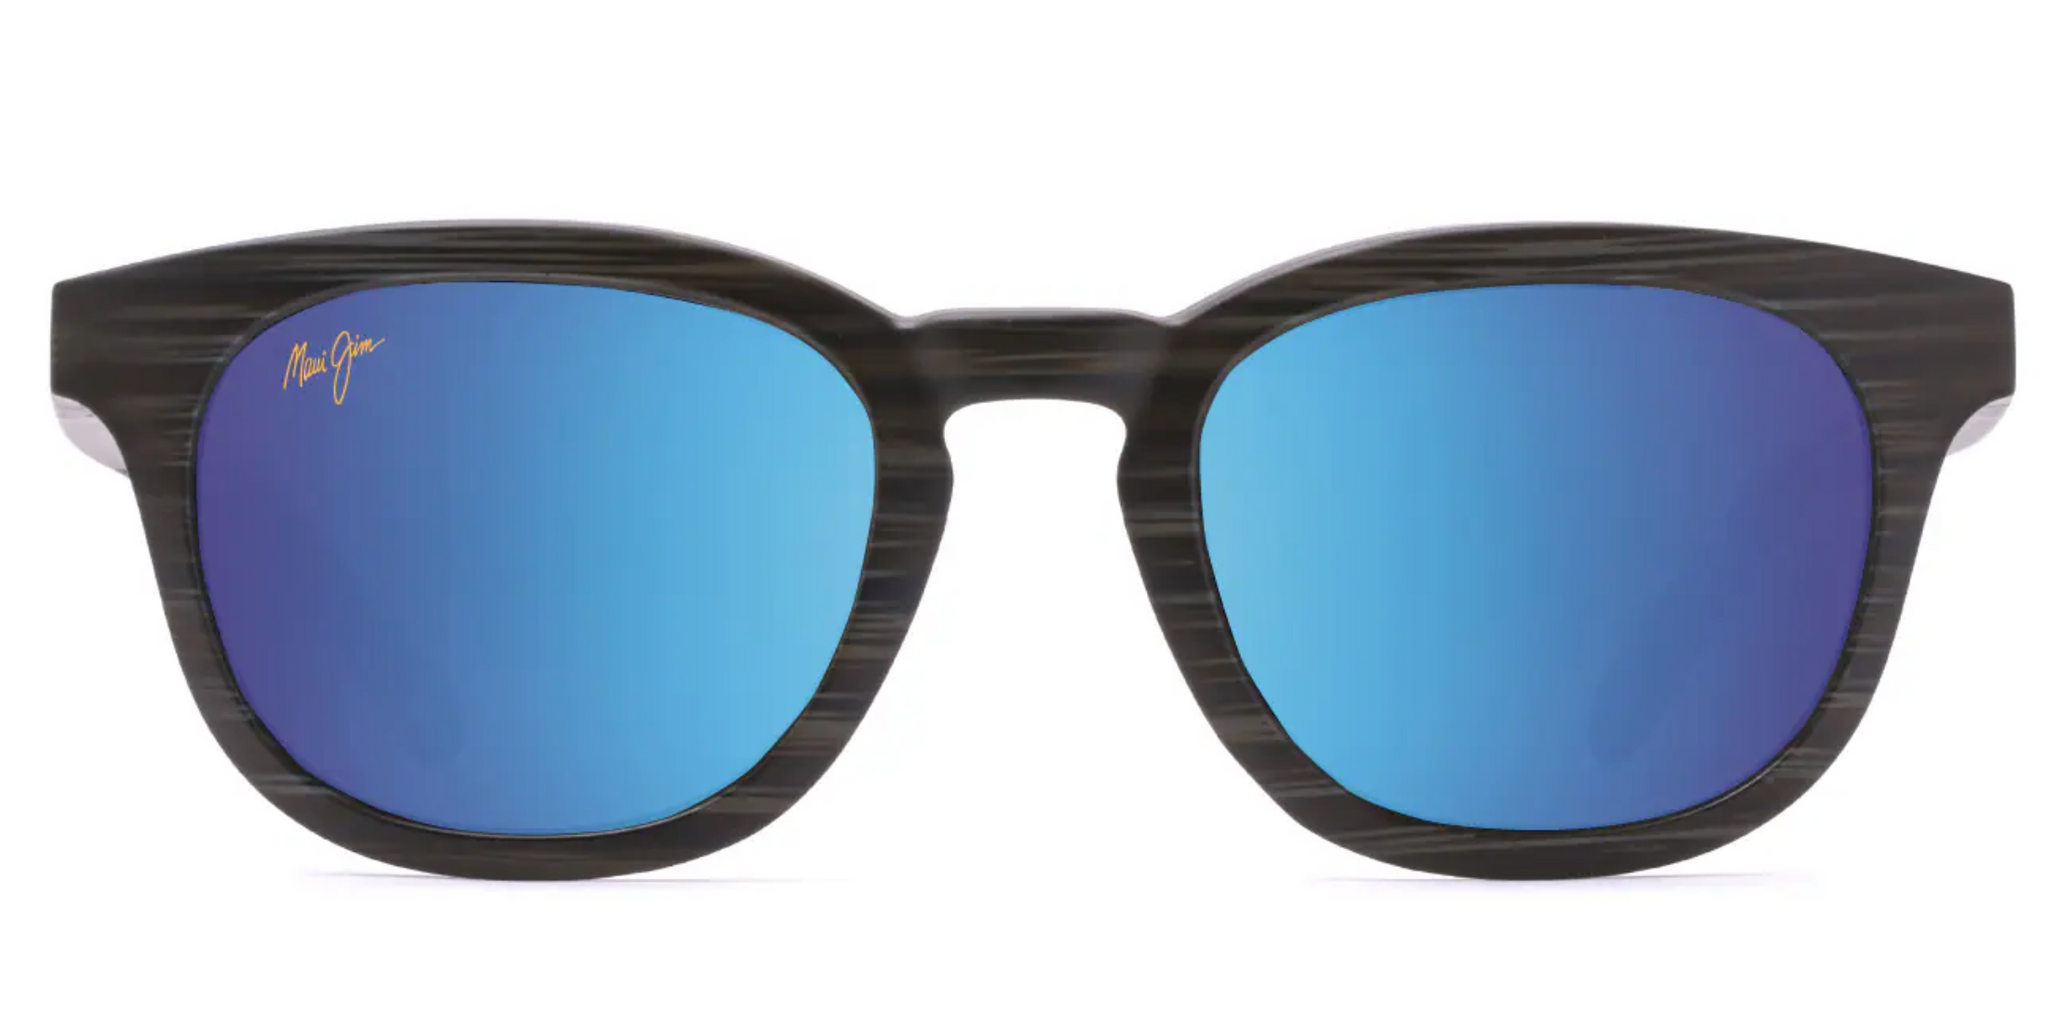 Maui Jim Koko Head 737 Sunglasses- Matte Aquamarine Wood Grain